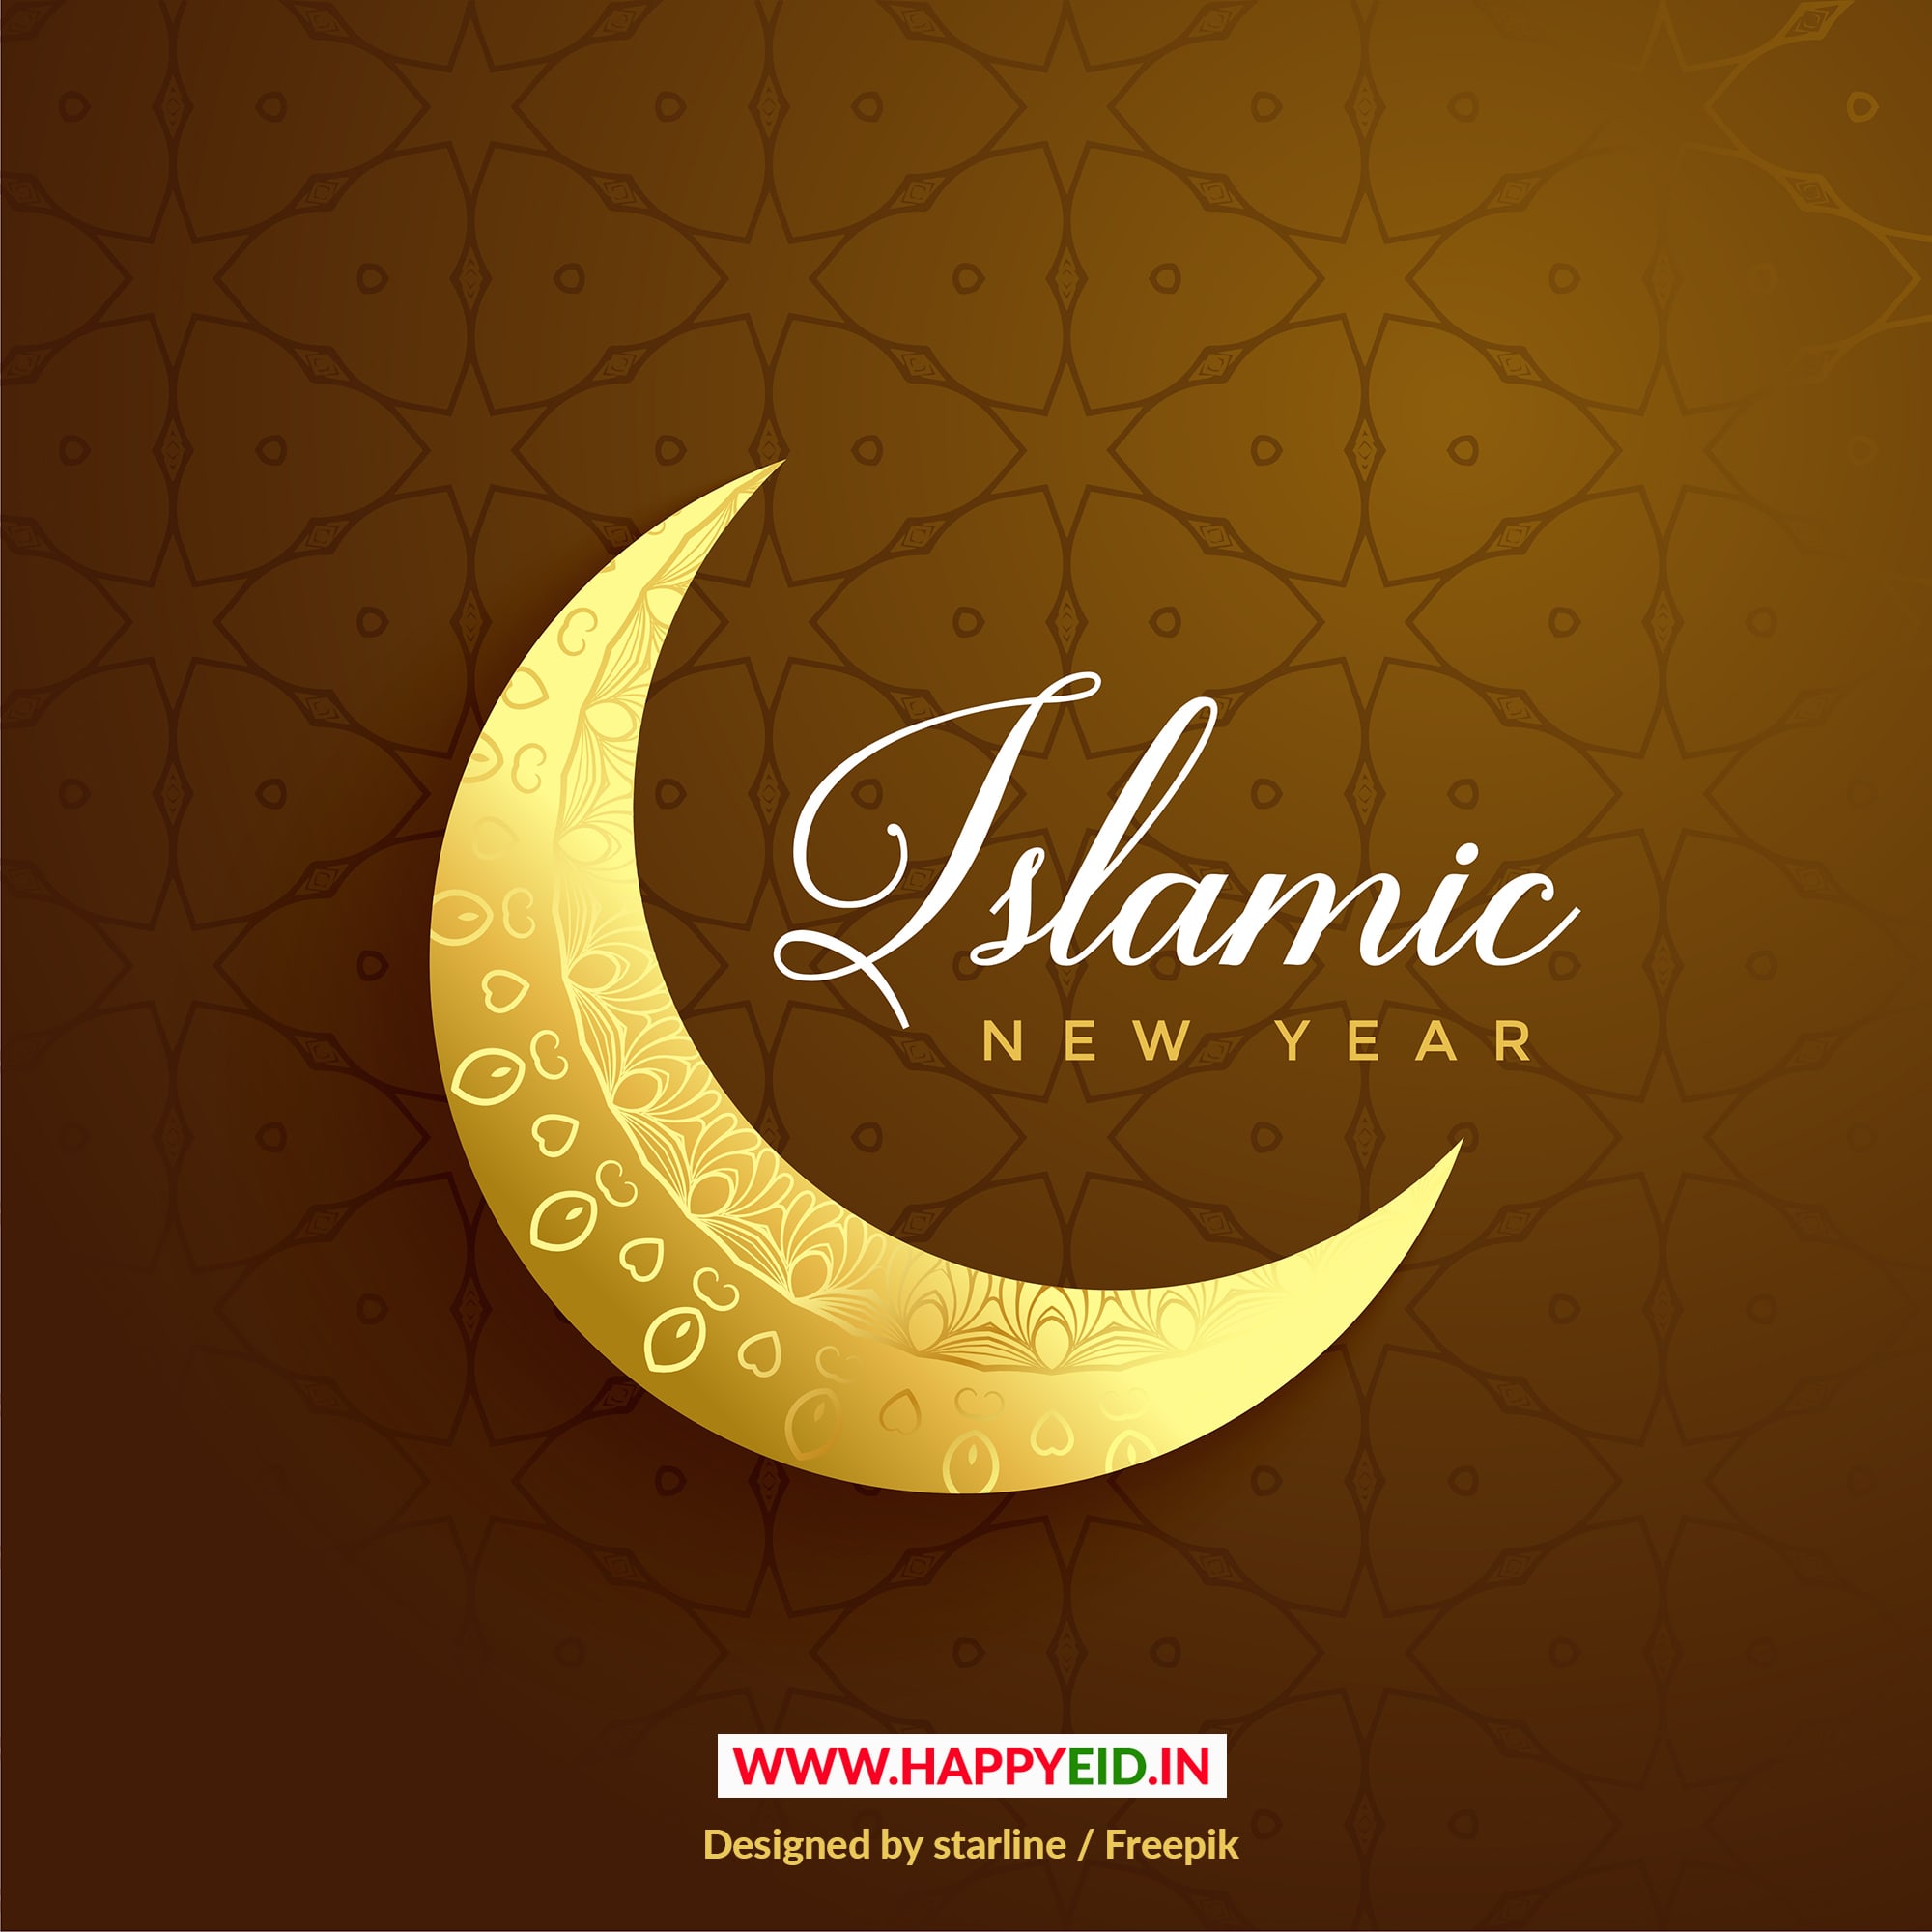 Islamic New Year Golden Moon Wallpaper - Happy Islamic New Year 2019 - HD Wallpaper 